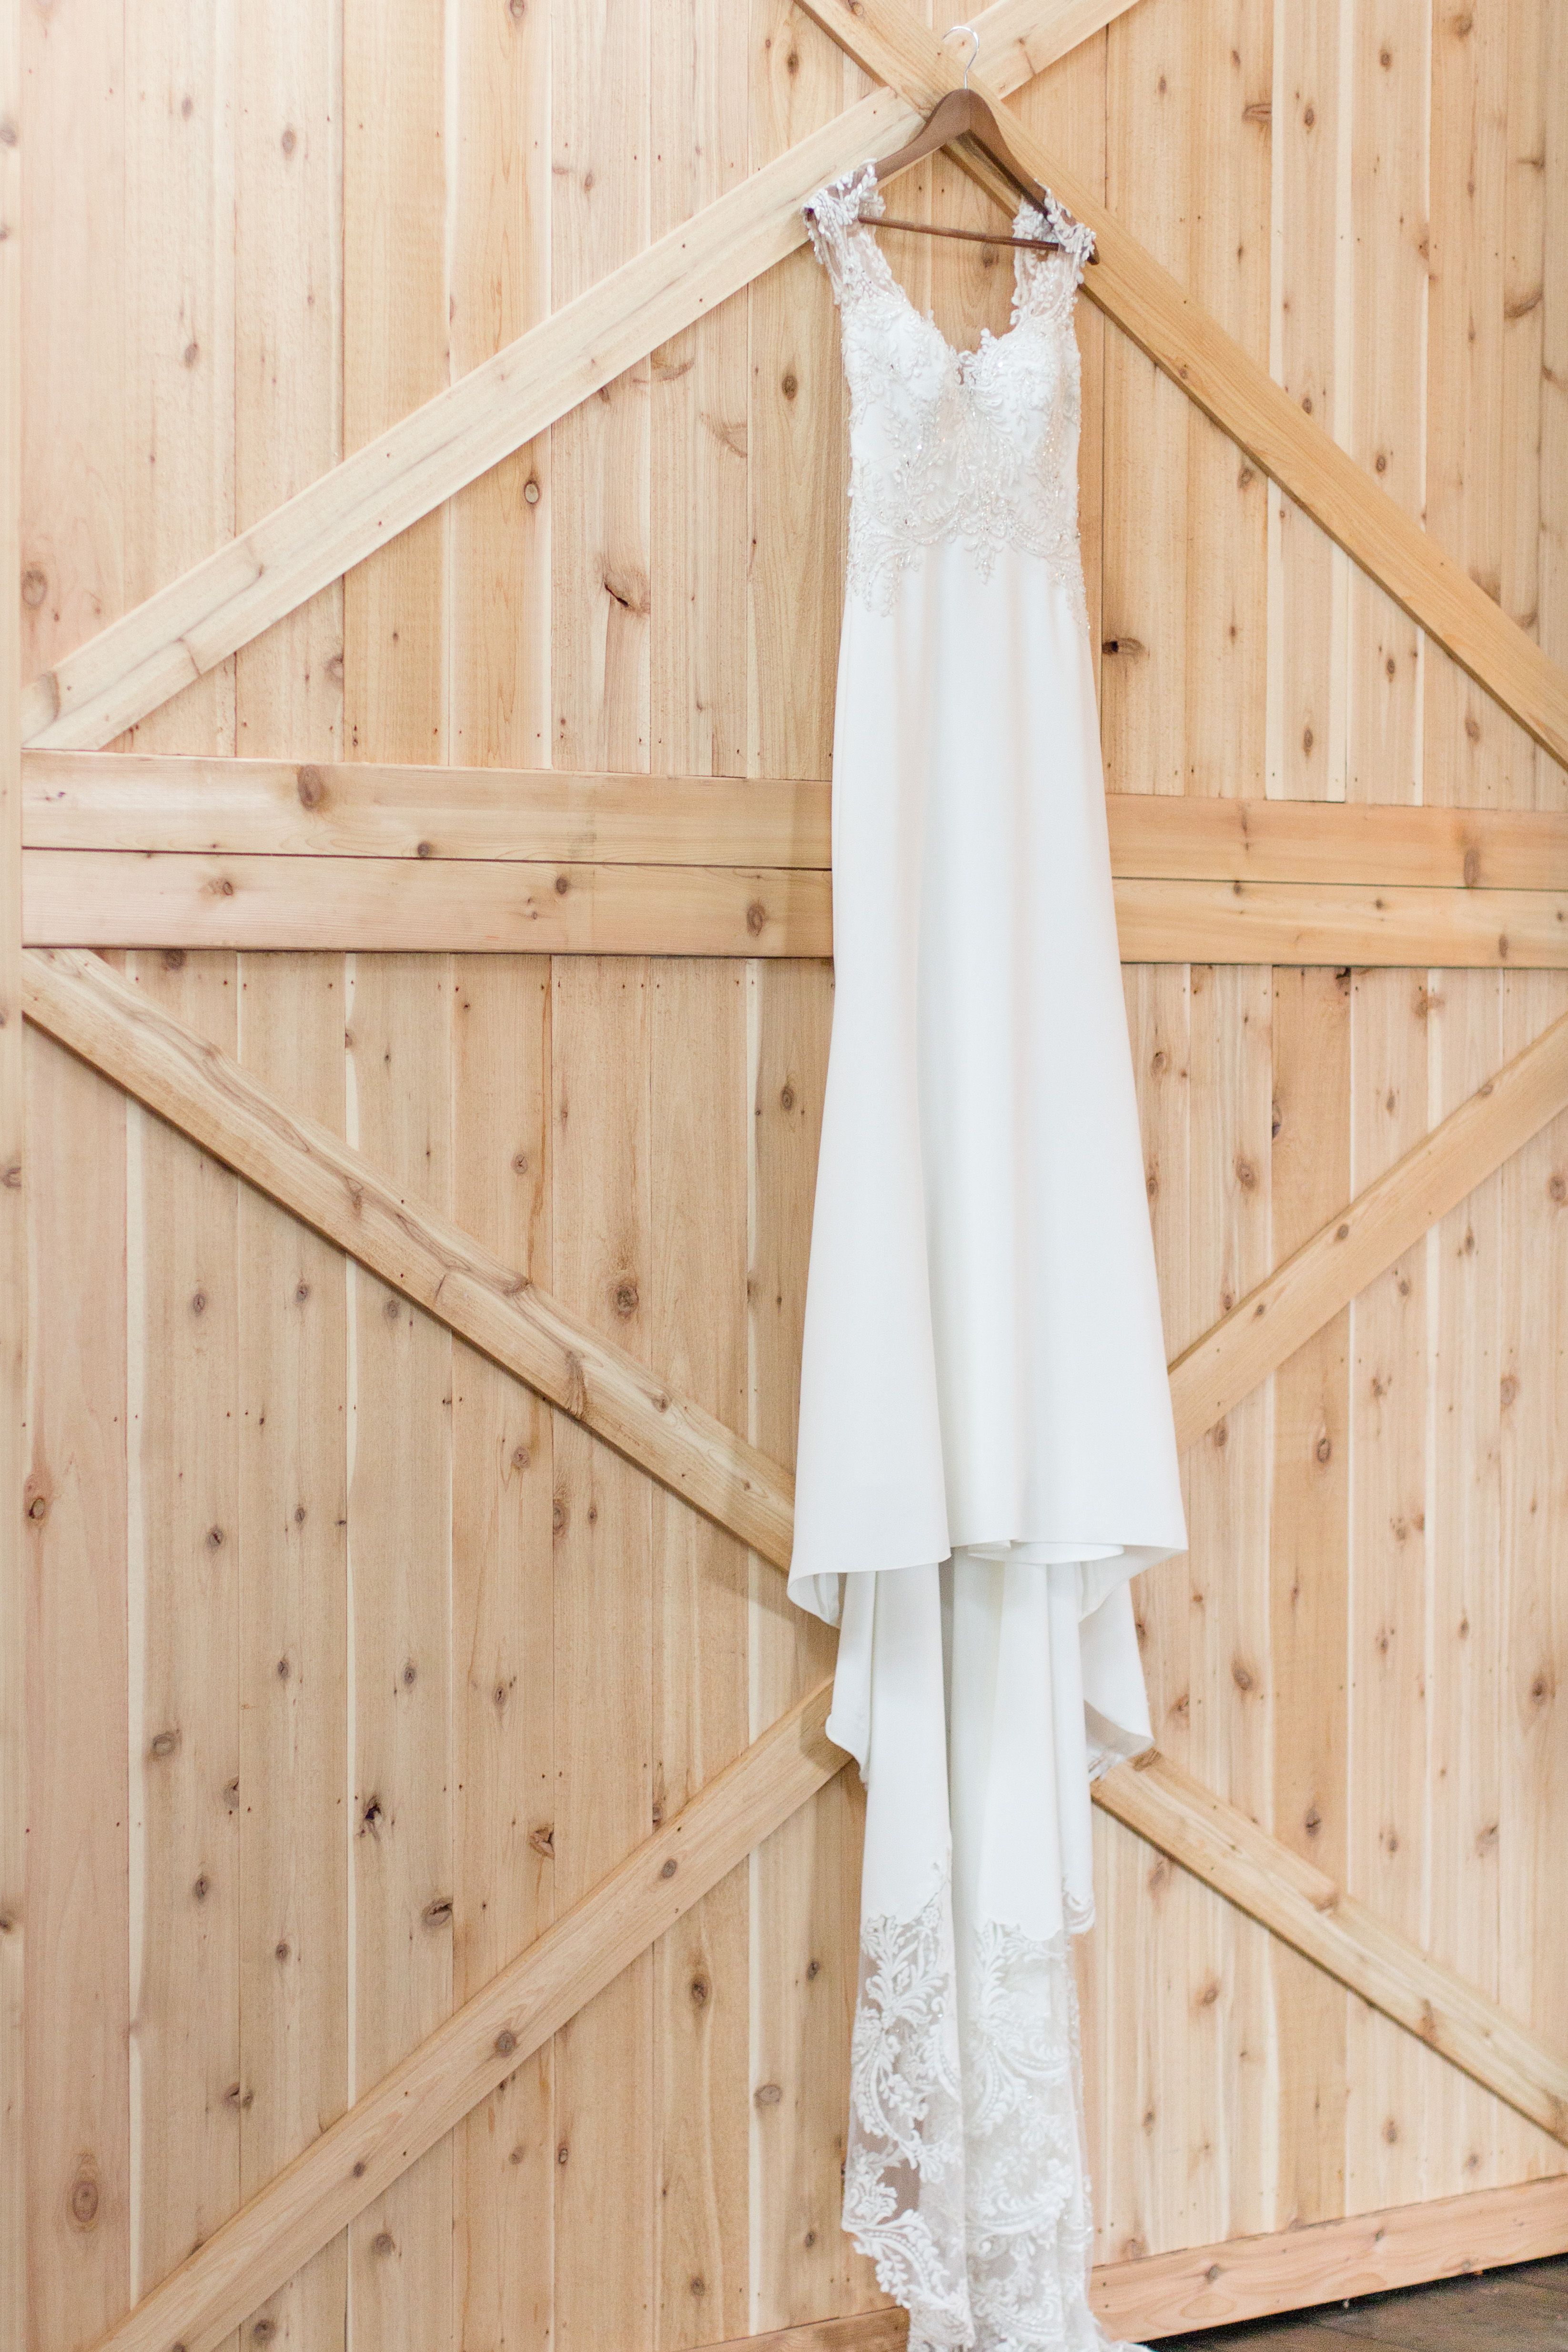 Beaded Wedding Dress with Long Beaded Train - Karen Elise Photography